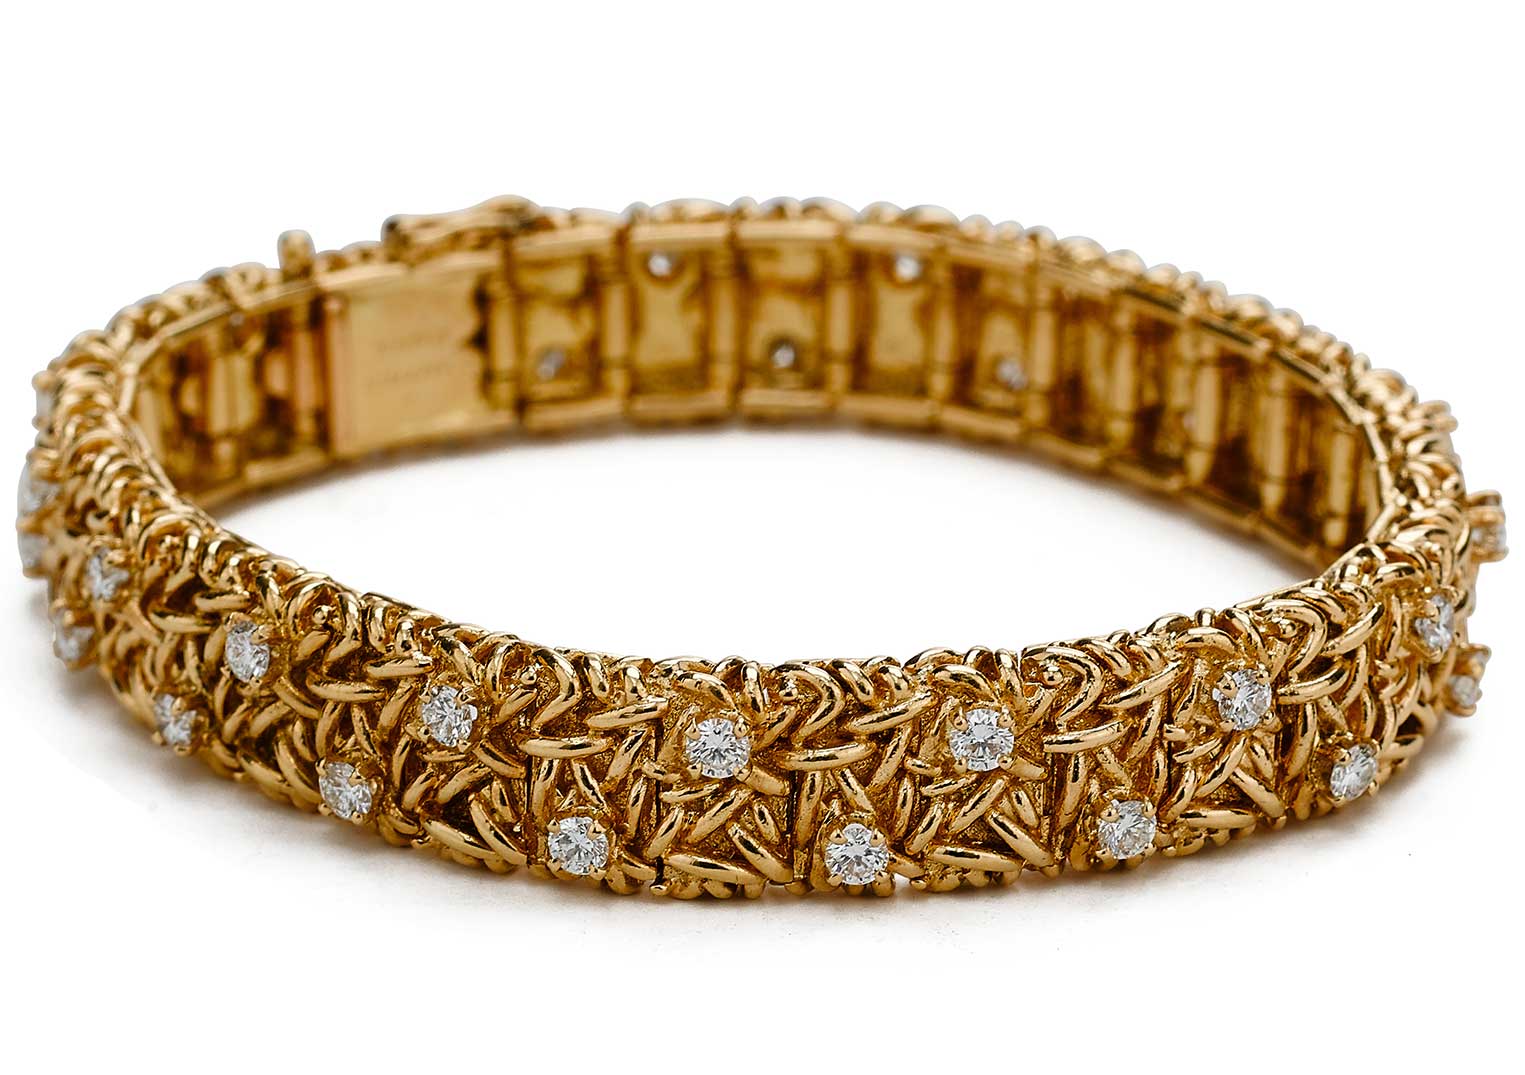 1950’s Cartier 18K Yellow Gold and Diamond Bracelet | Latest Revival